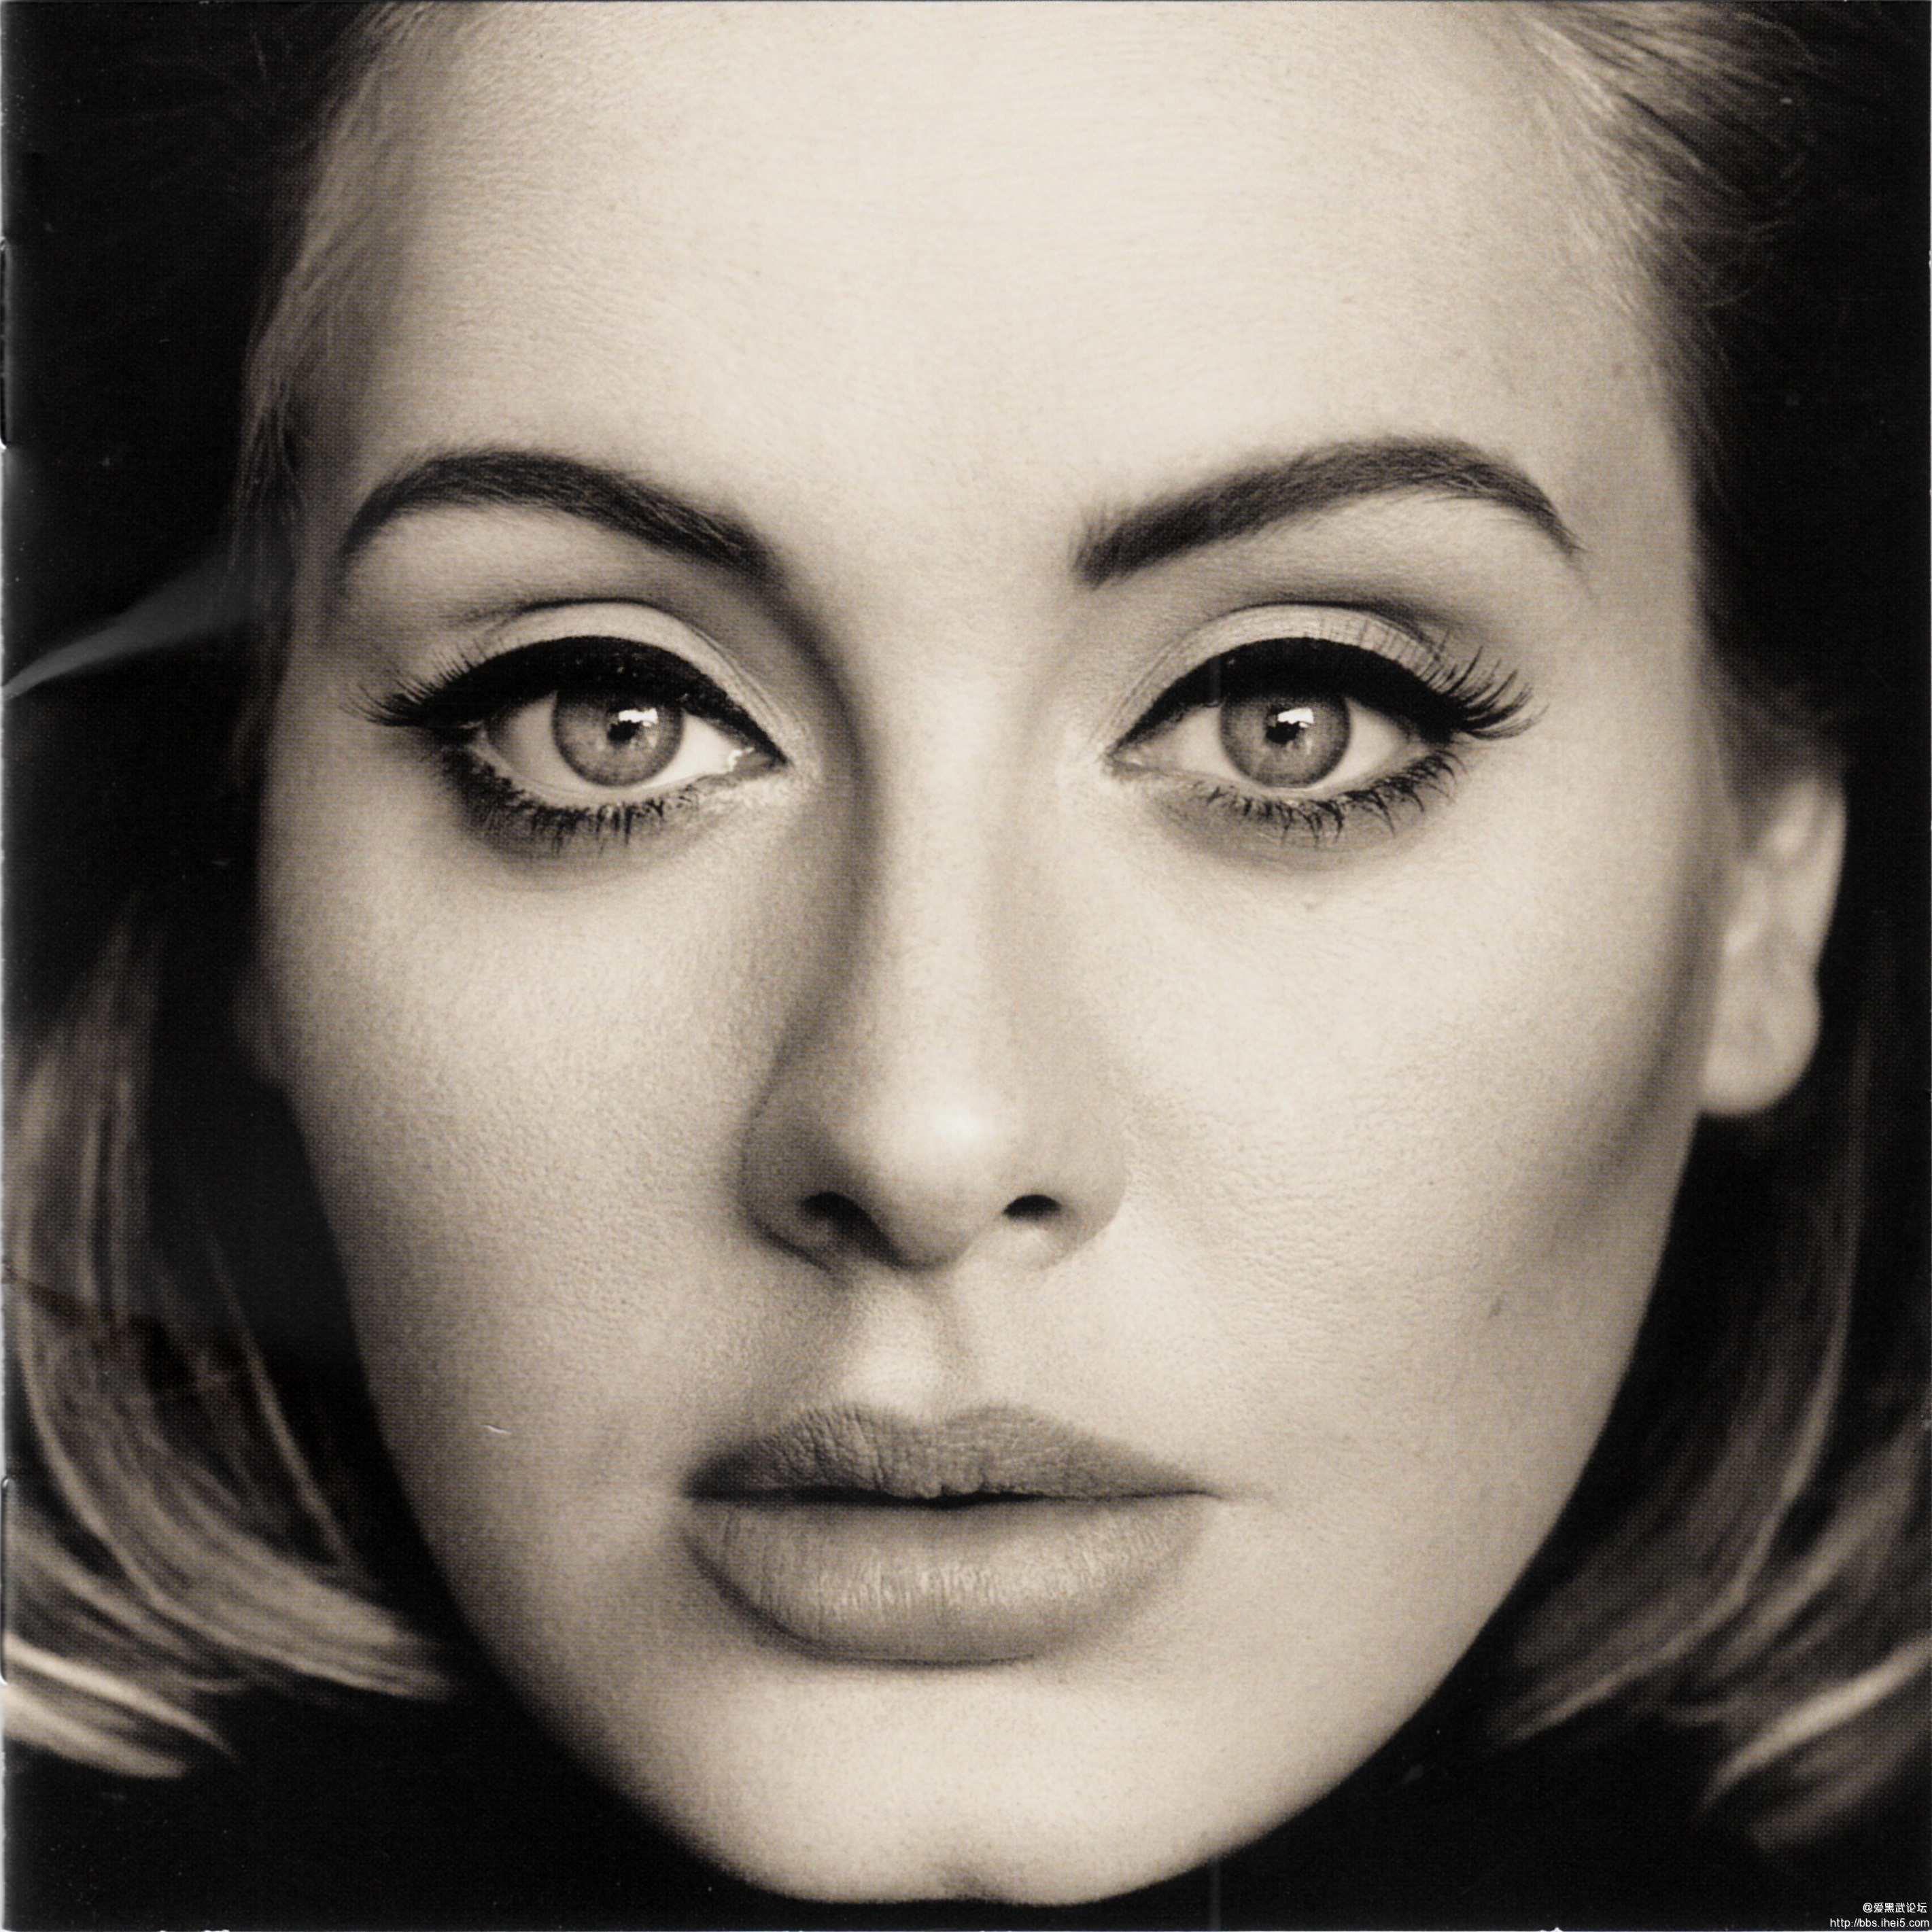 Adele - 25 (Japan Edition) 002.jpg